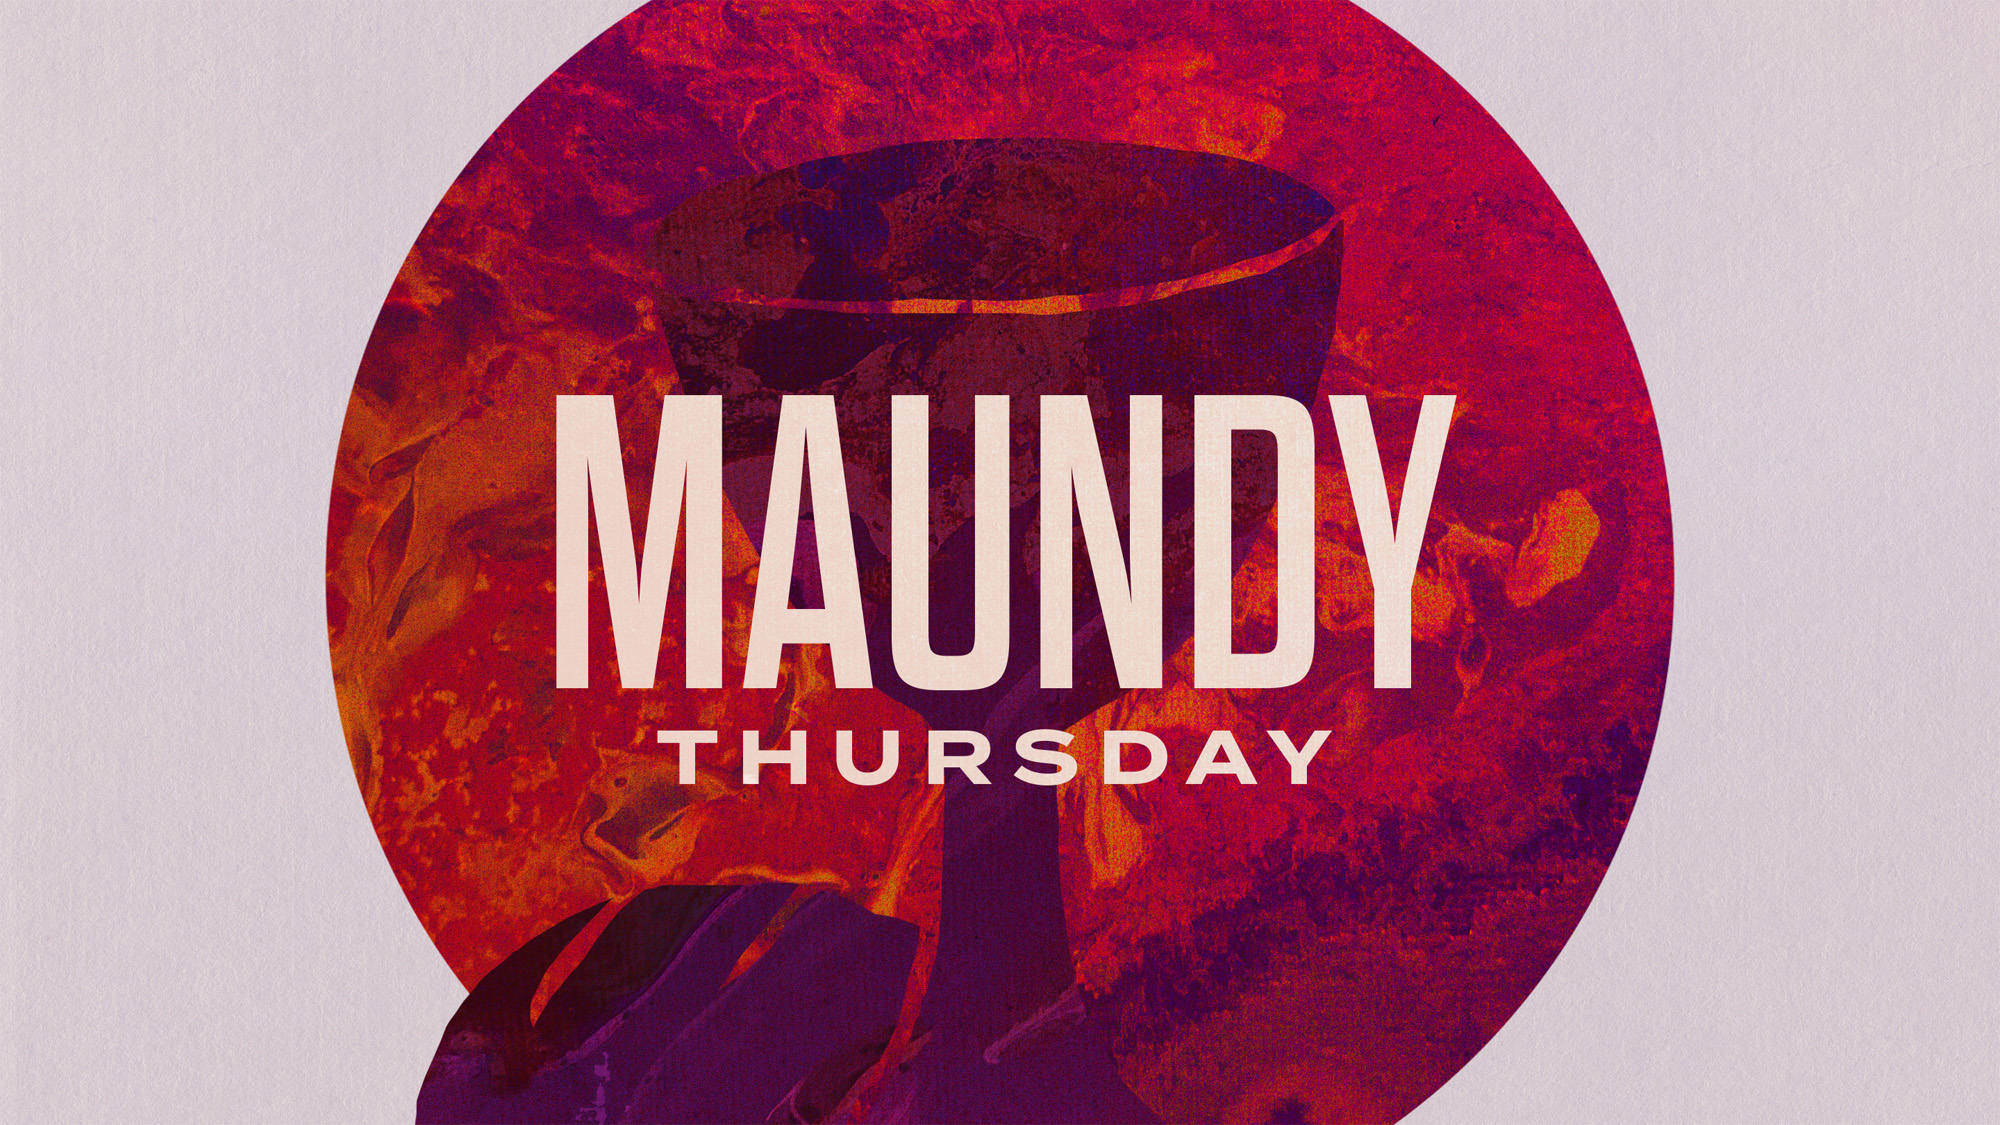 maundy thursday title 1 wide 16x9